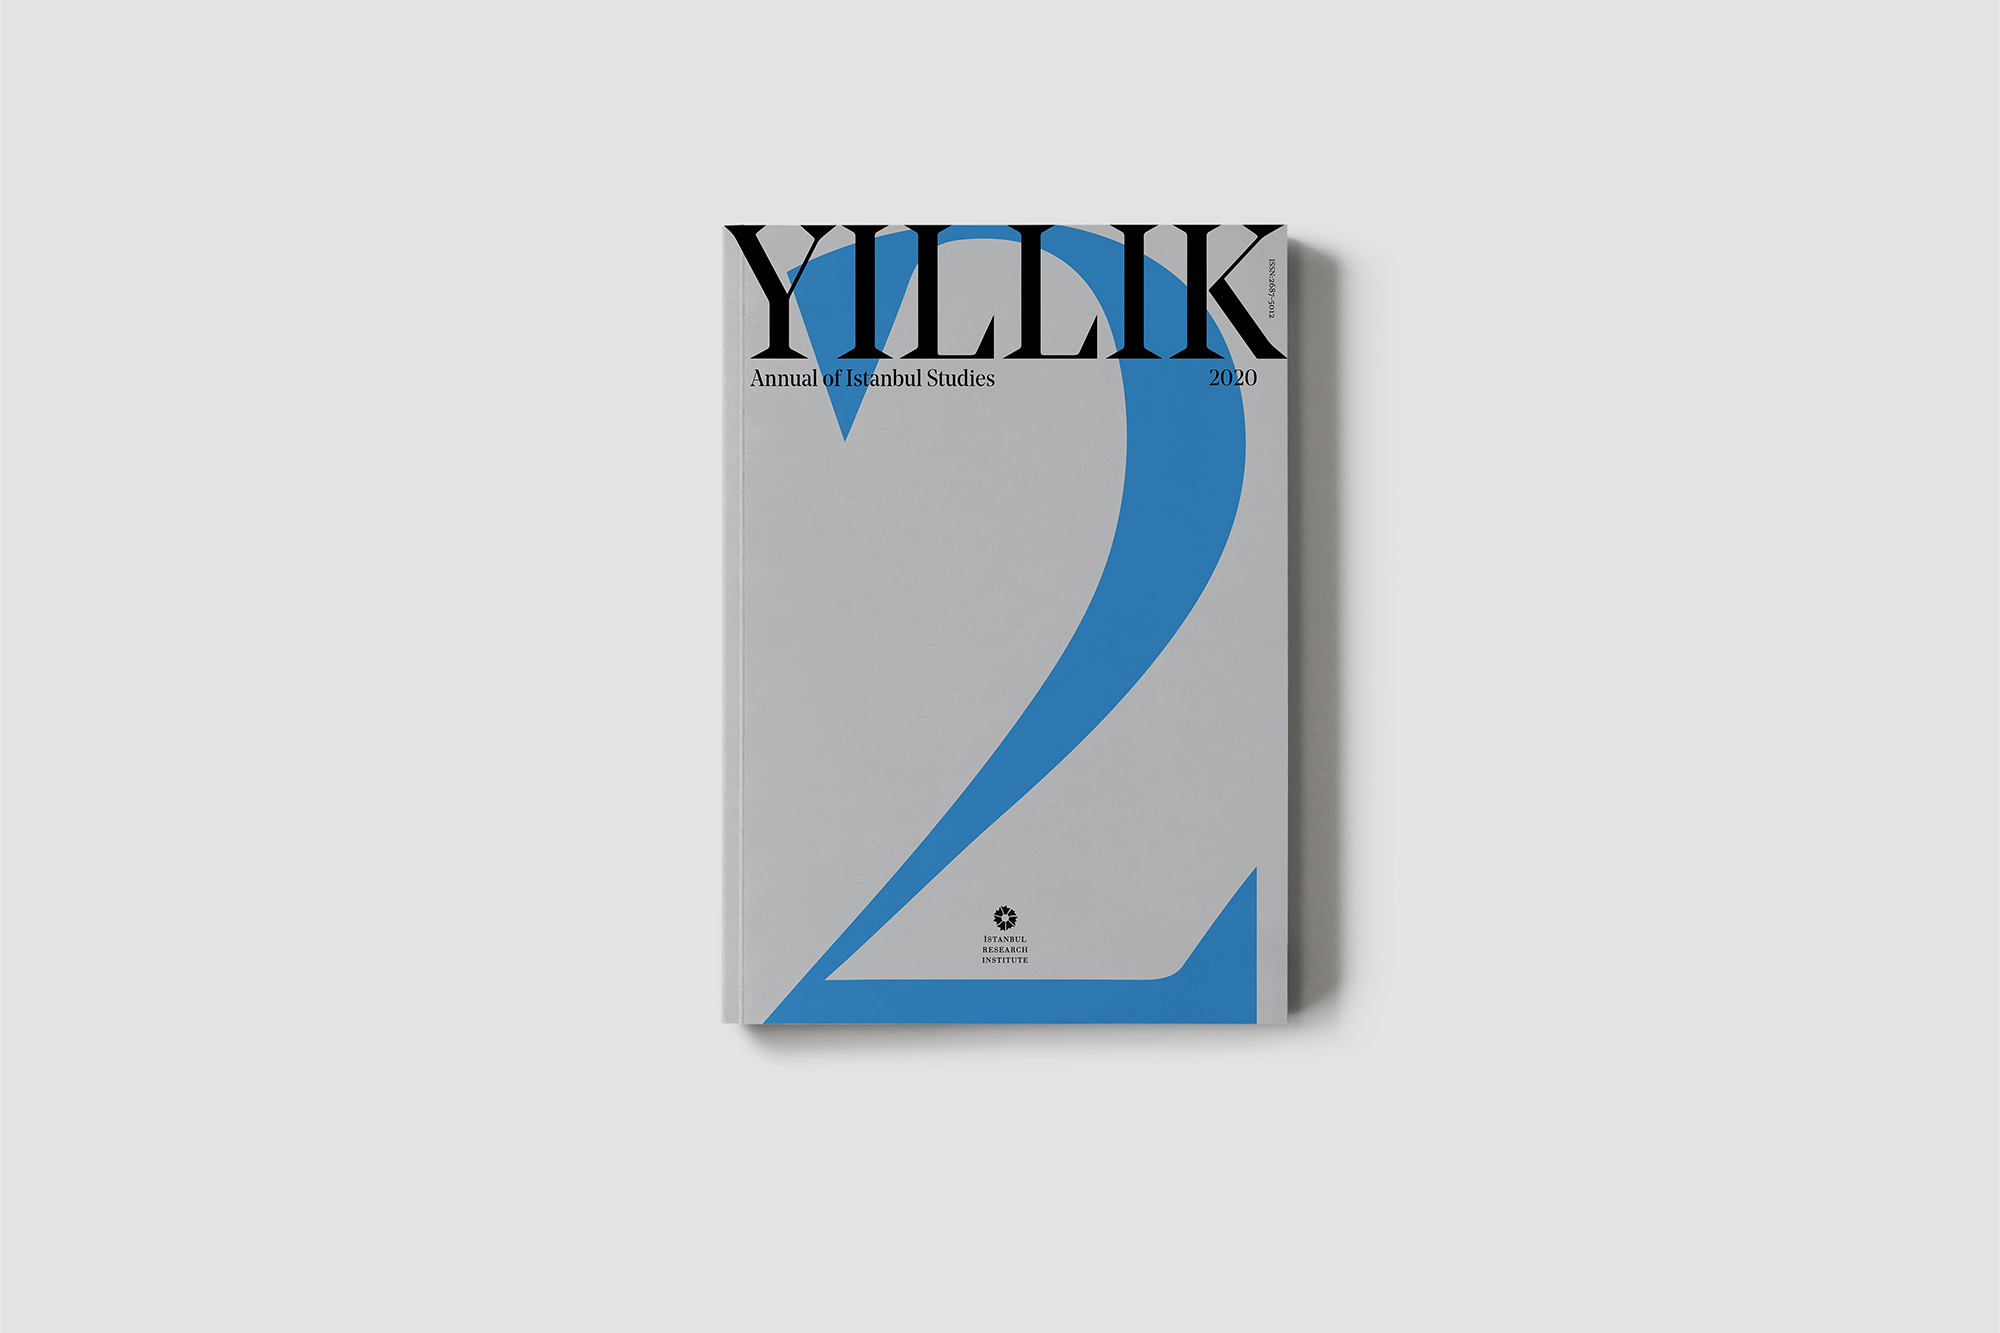 YILLIK2